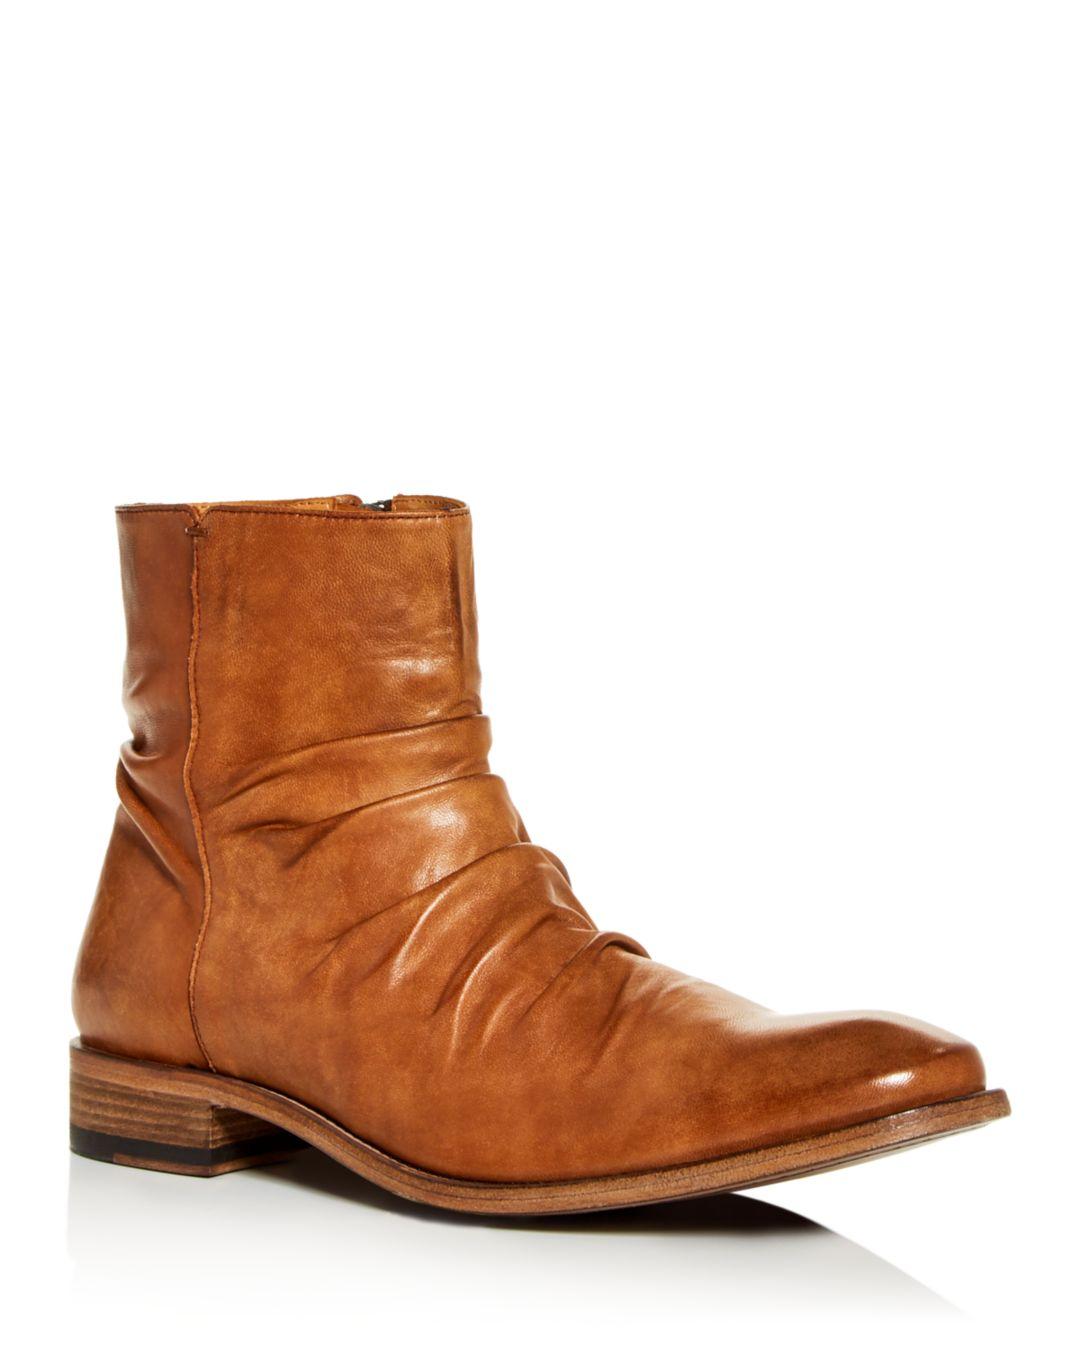 John Varvatos Men's Morrison Sharpei Leather Boots in Brown for Men - Lyst